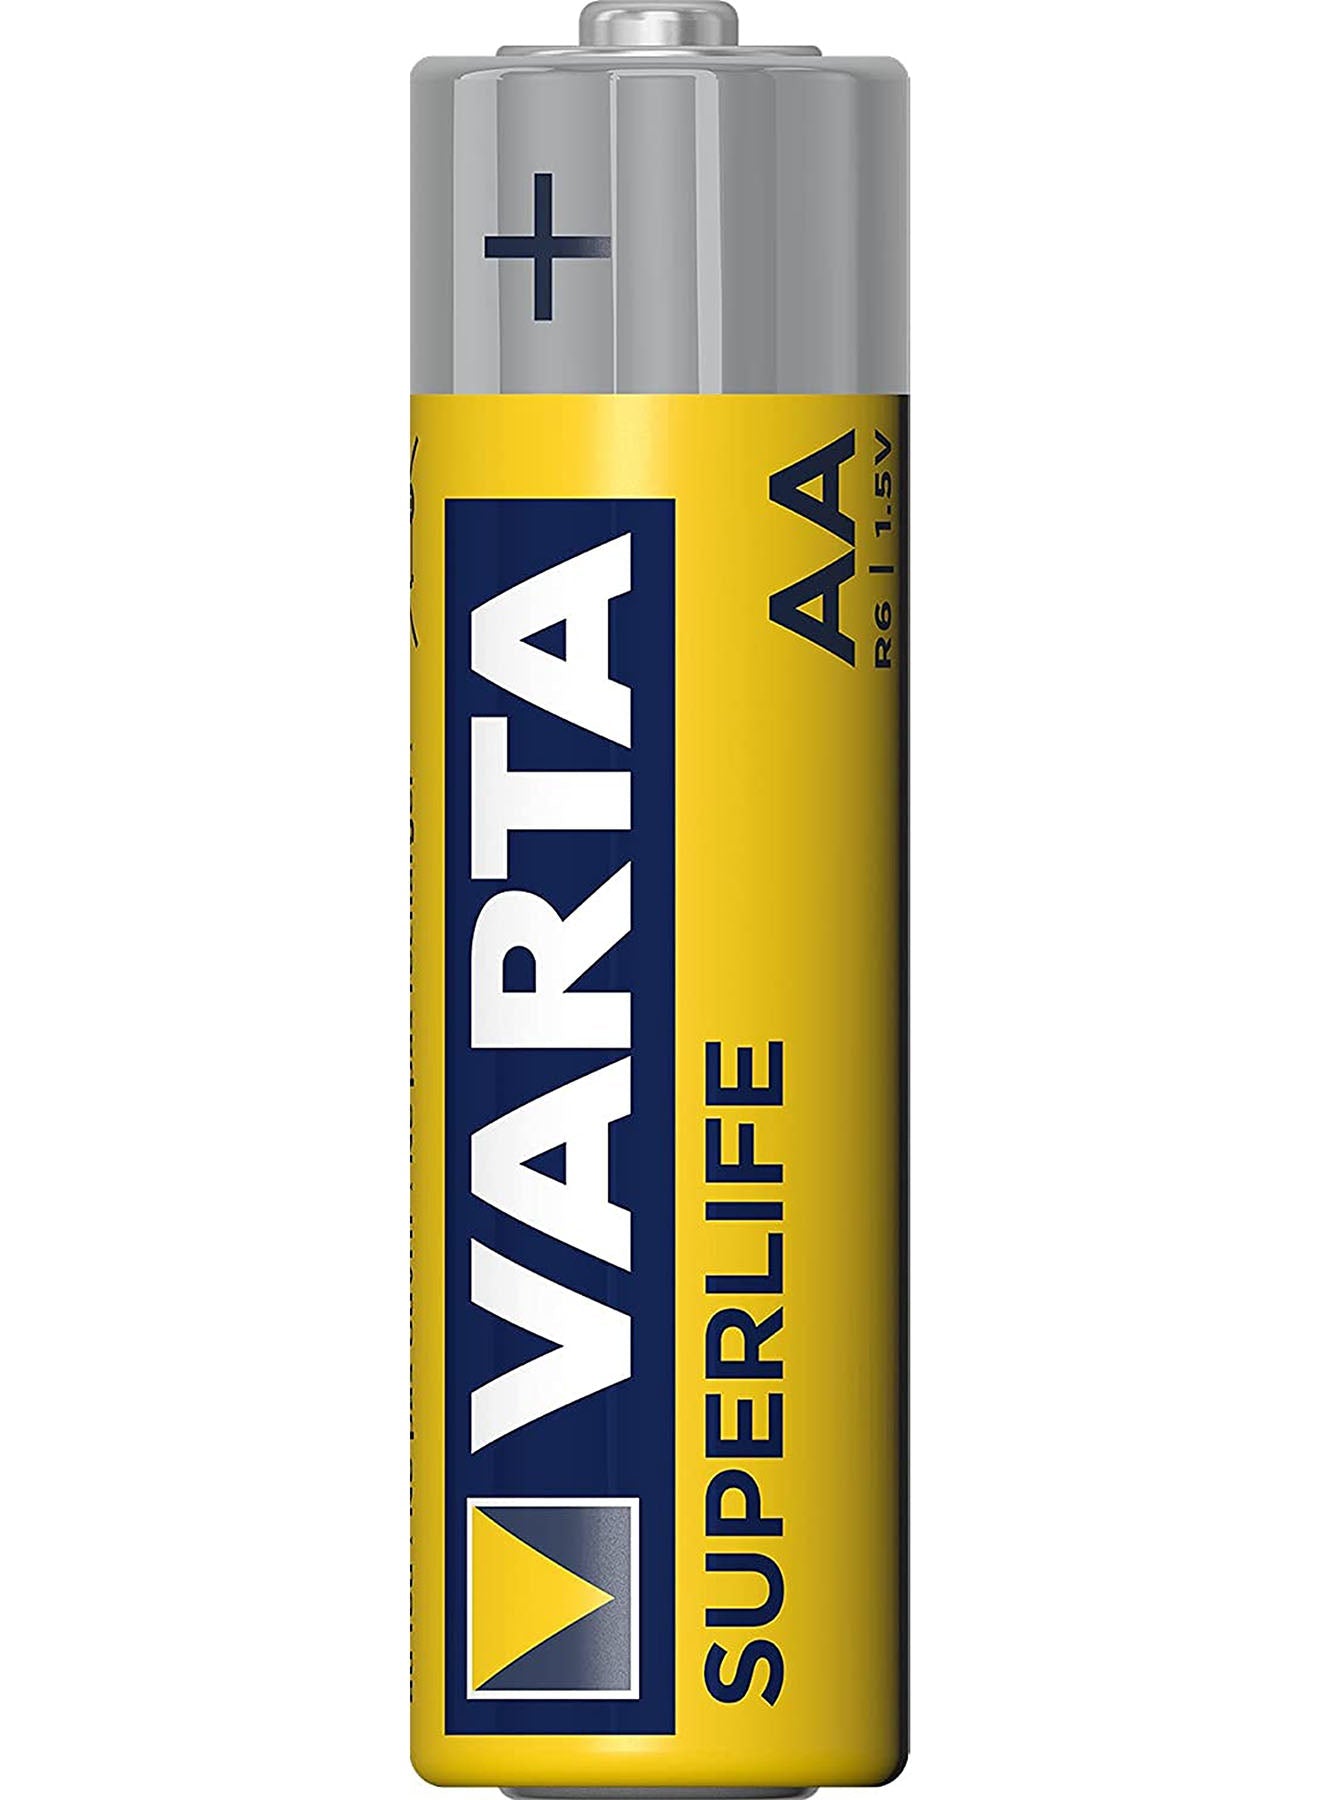 Varta Superlife AA Battery 4 Units Value Pack of 3 